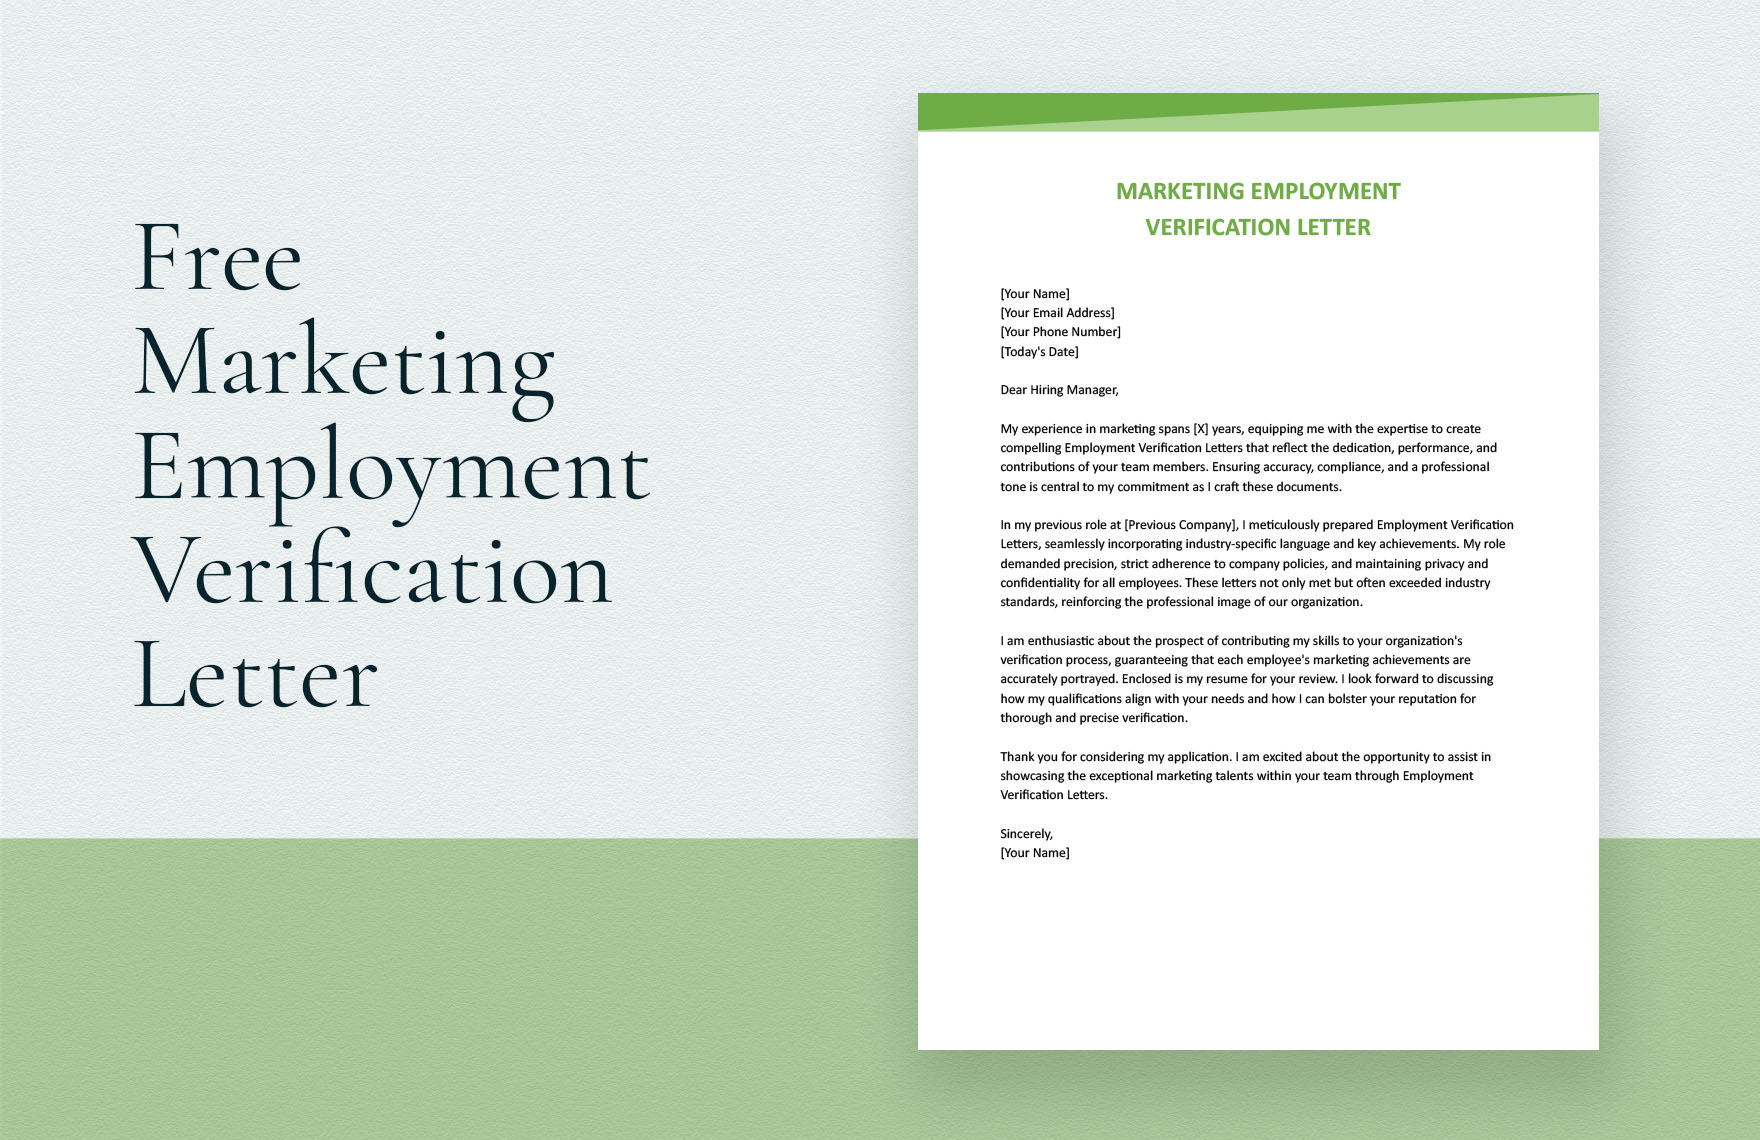 Free Marketing Employment Verification Letter